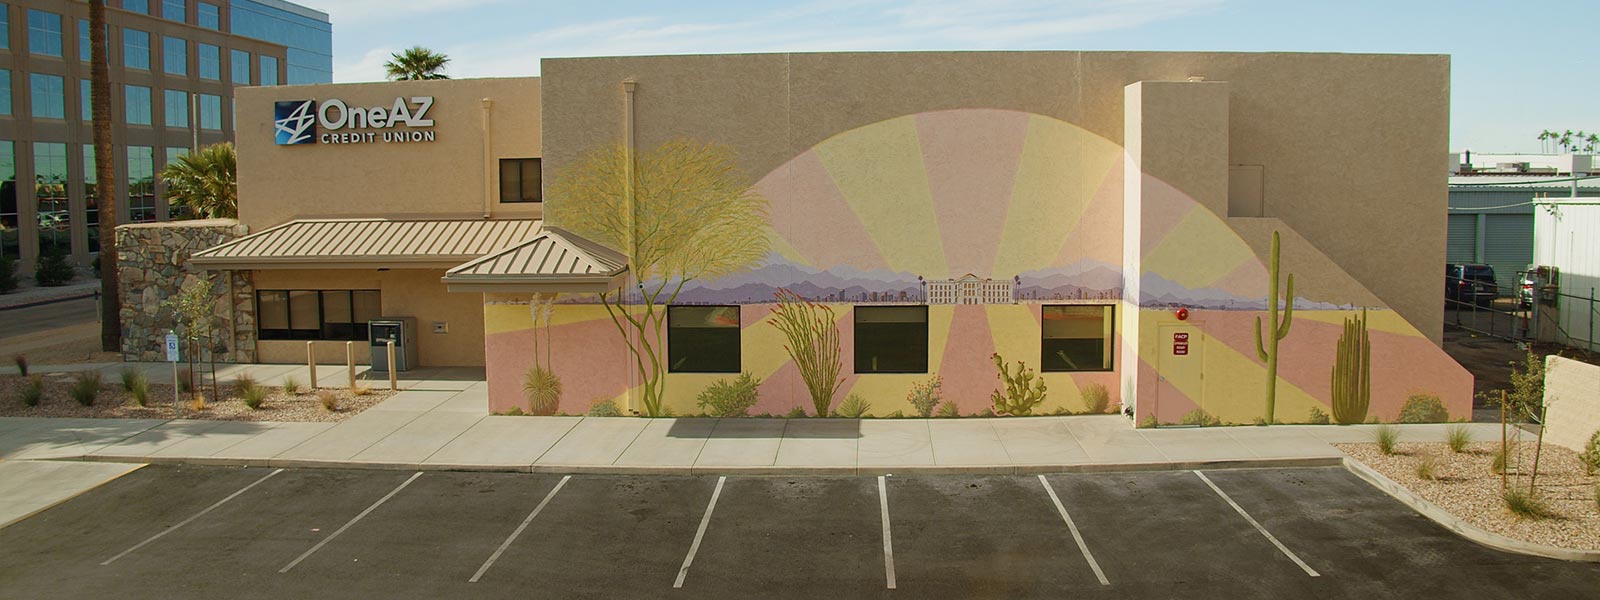 Phoenix Monroe St branch mural by Laura Spalding Best